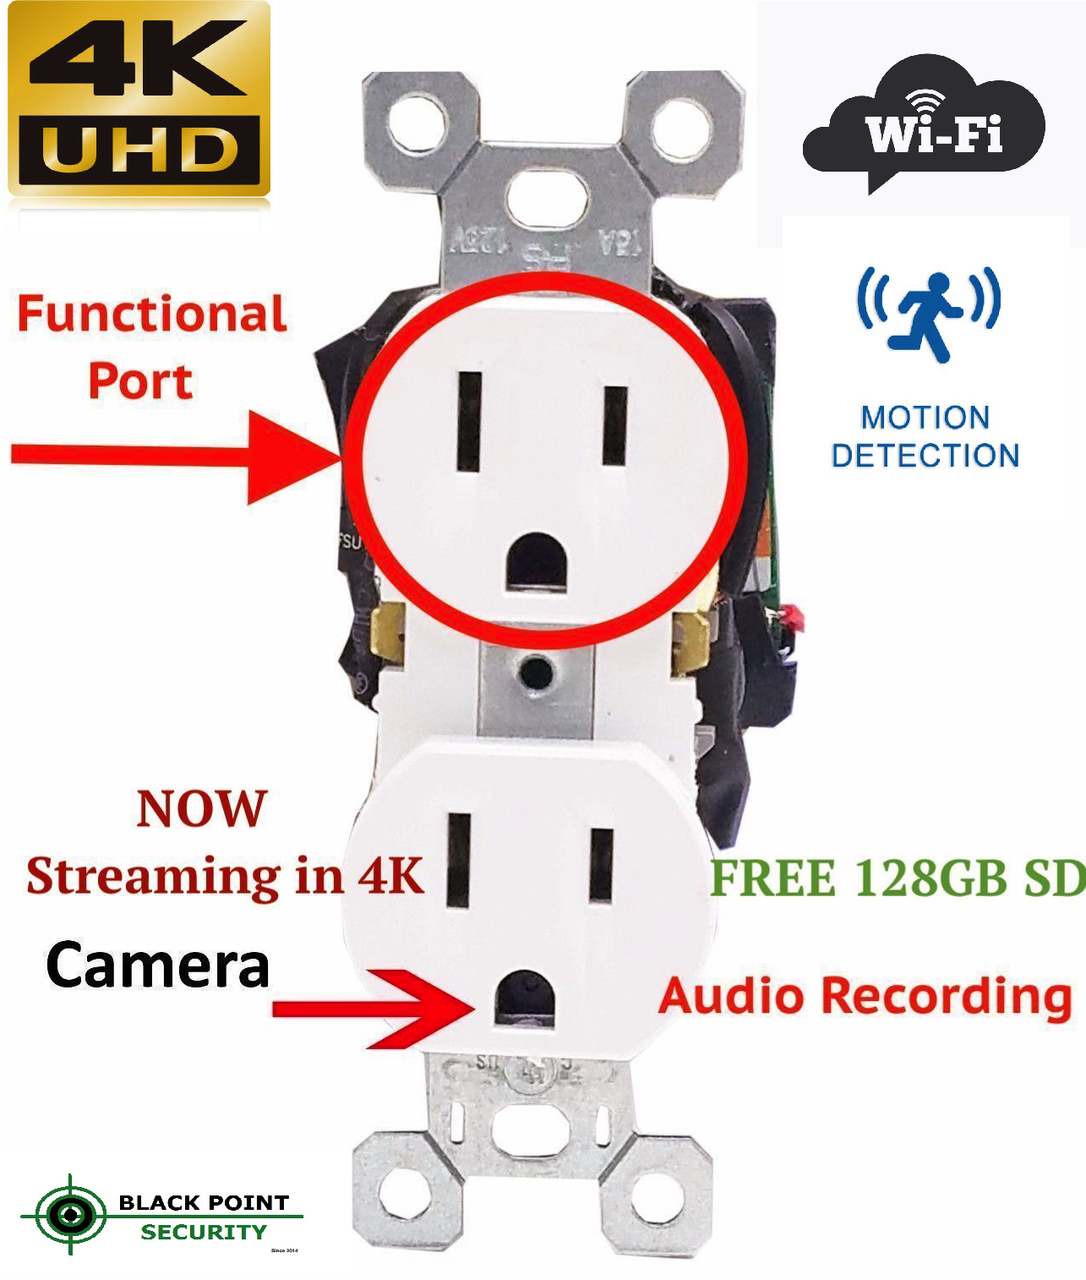 Functional Outlet Hidden 4K Streaming Camera